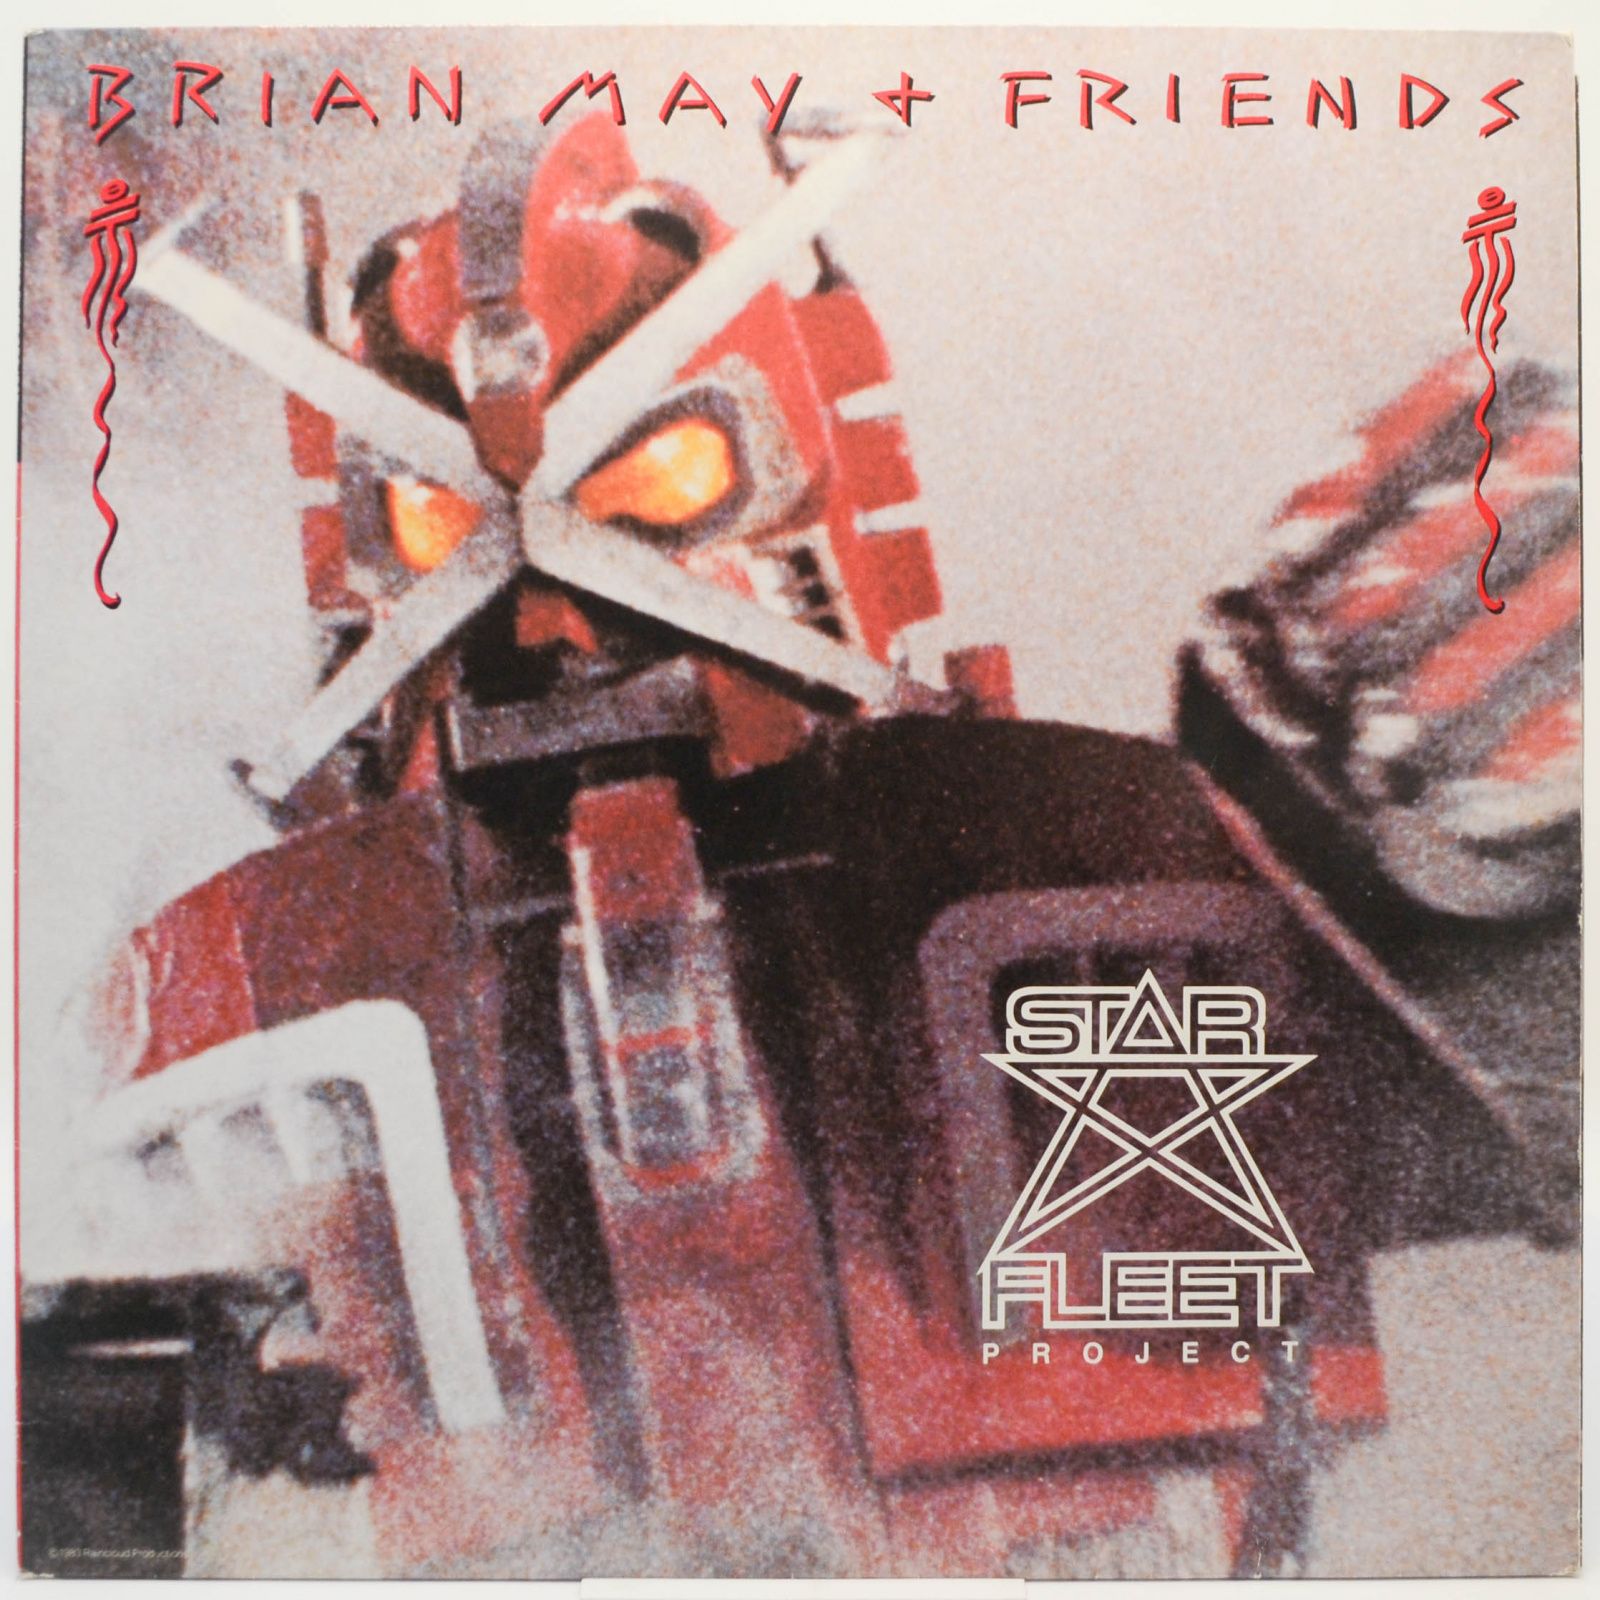 Brian May + Friends — Star Fleet Project, 1983